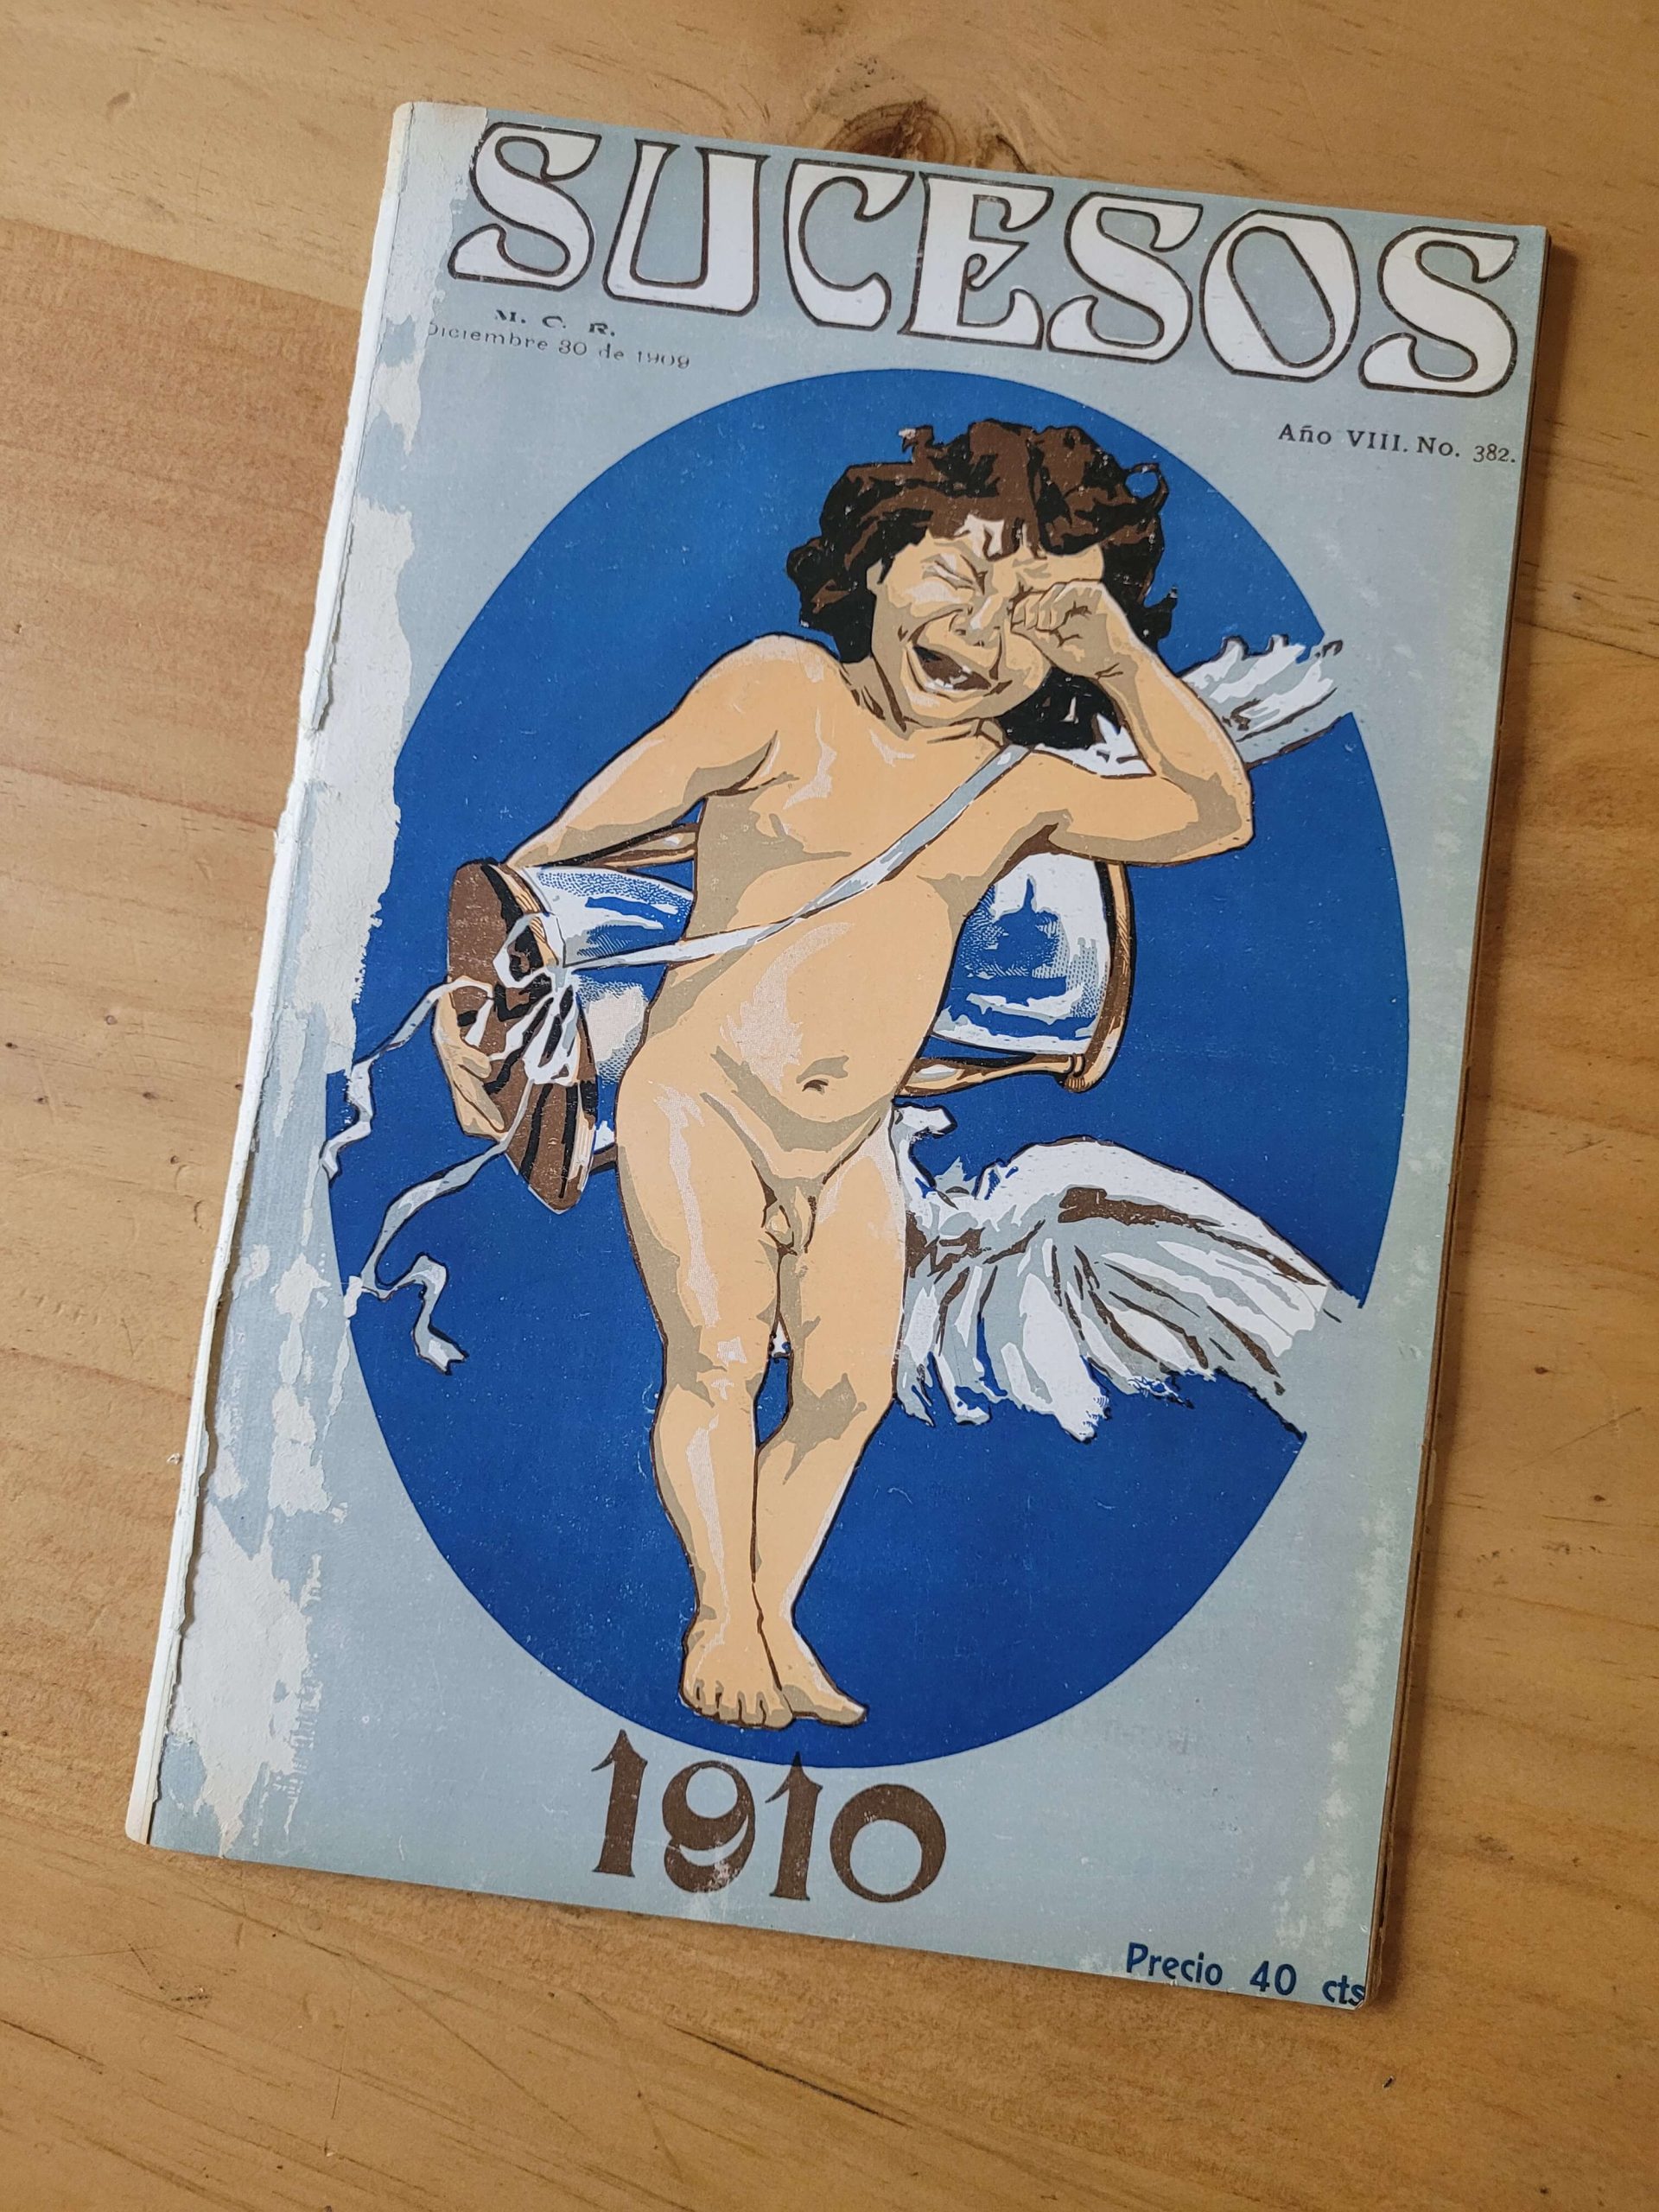 (1909) Revista SUCESOS (30 de diciembre)